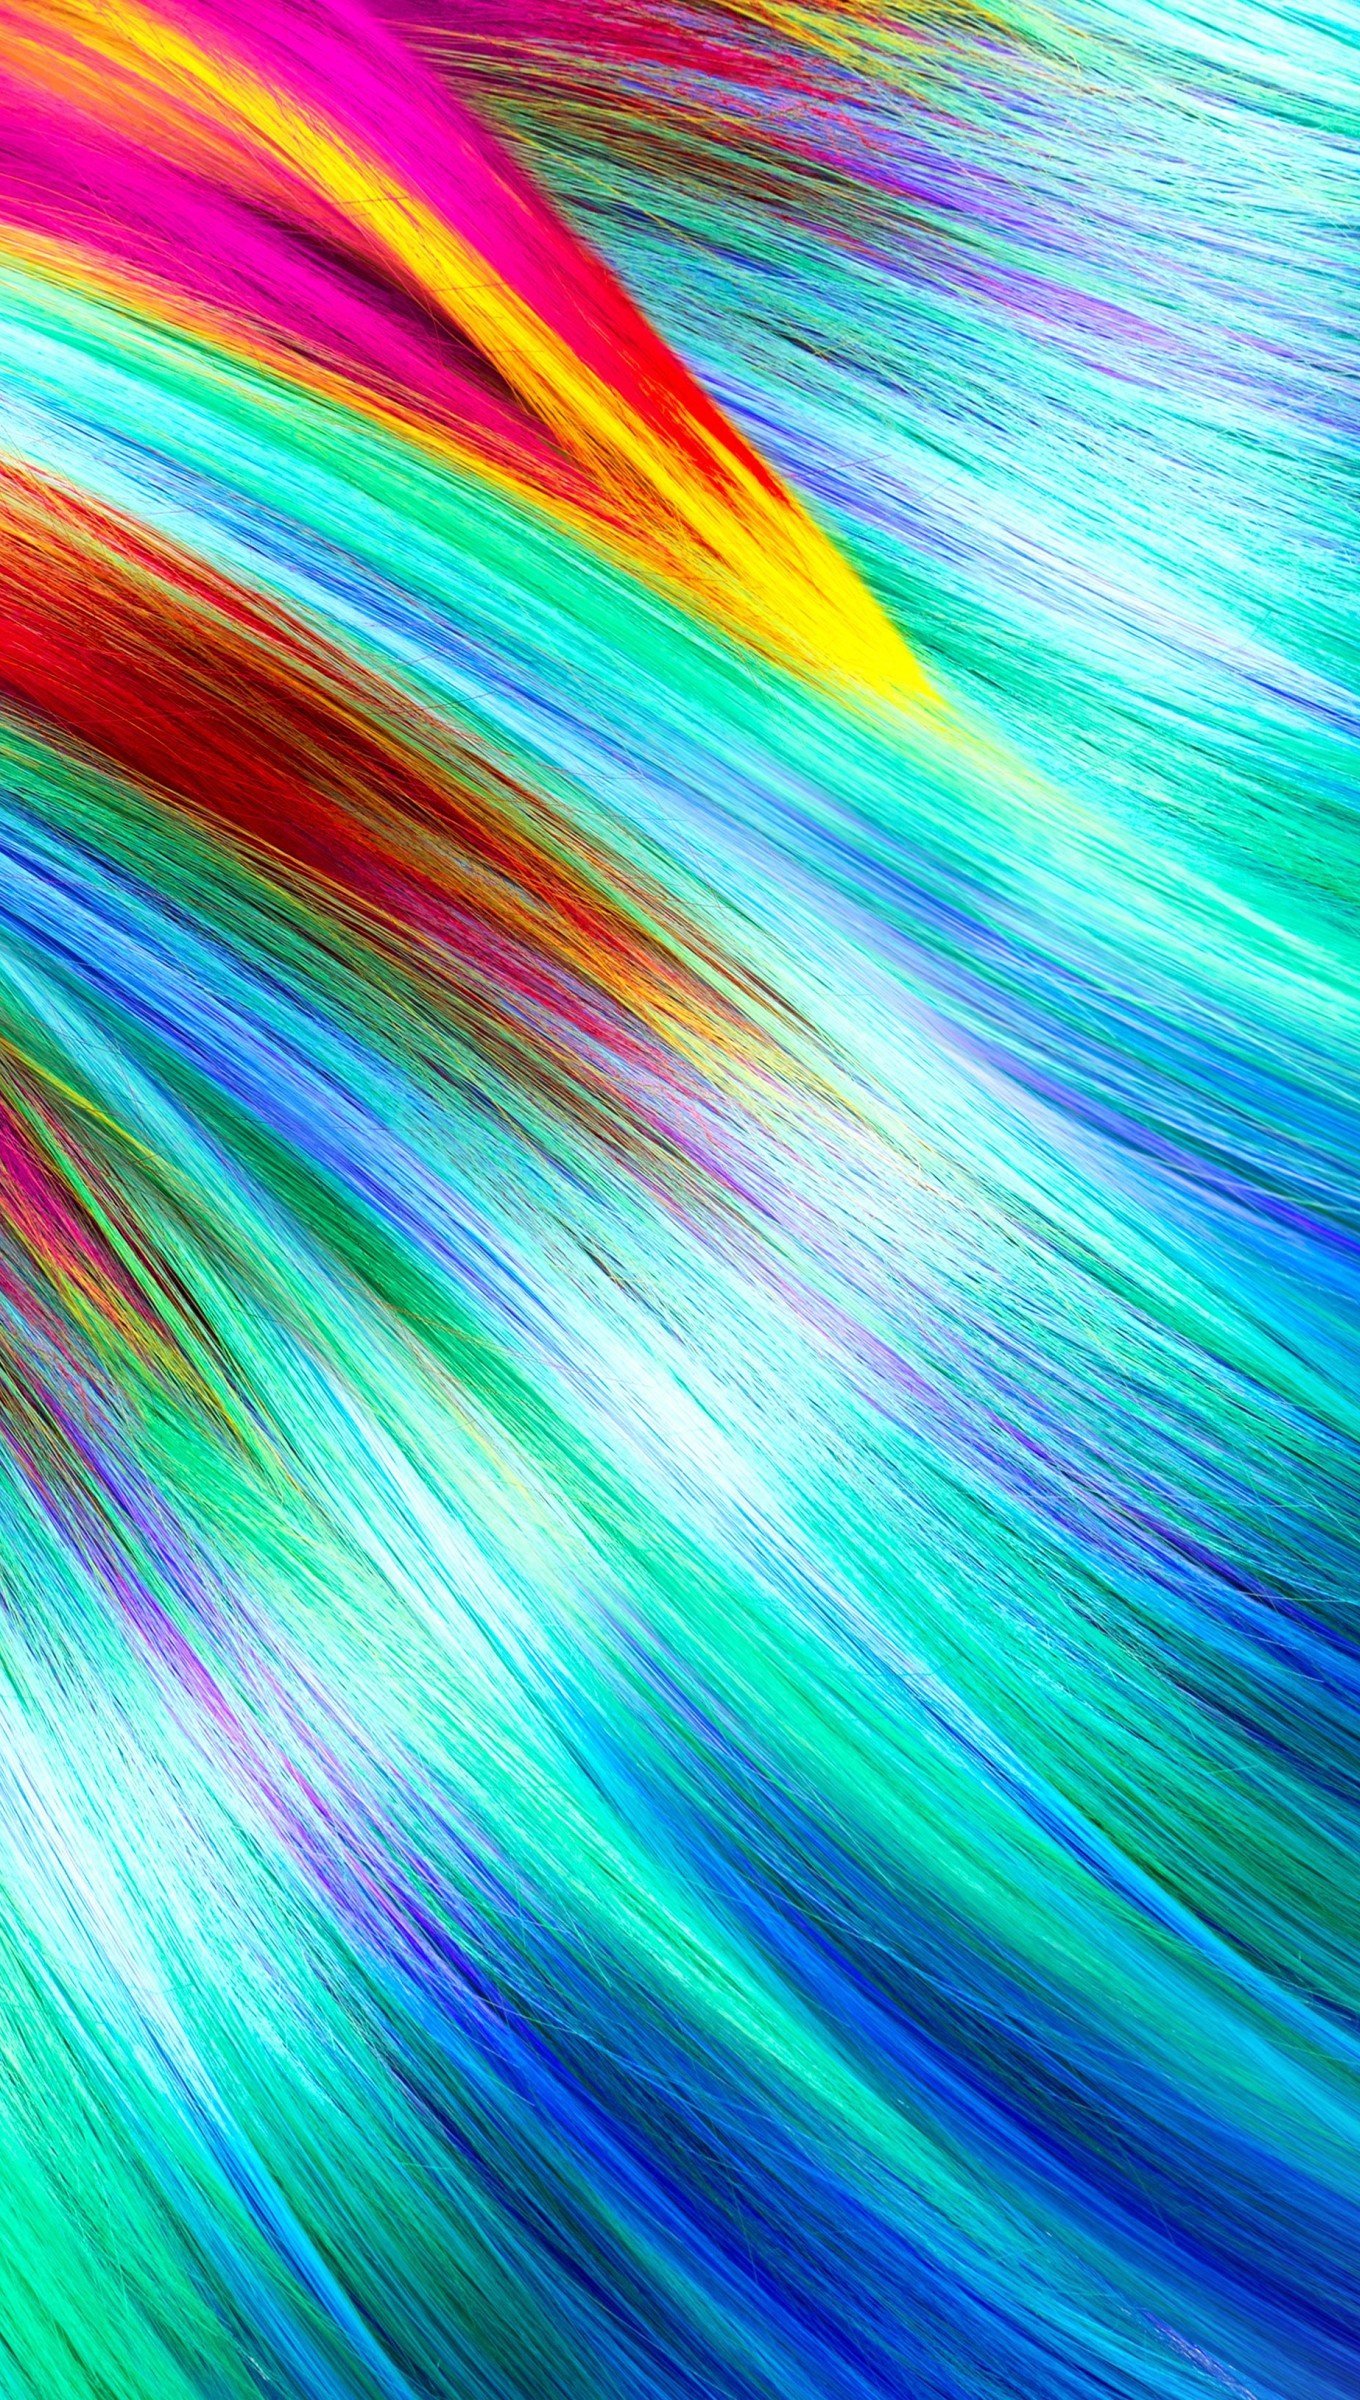 Mujer con cabello de colores del arcoiris Fondo de pantalla 4k Ultra HD  ID:4805